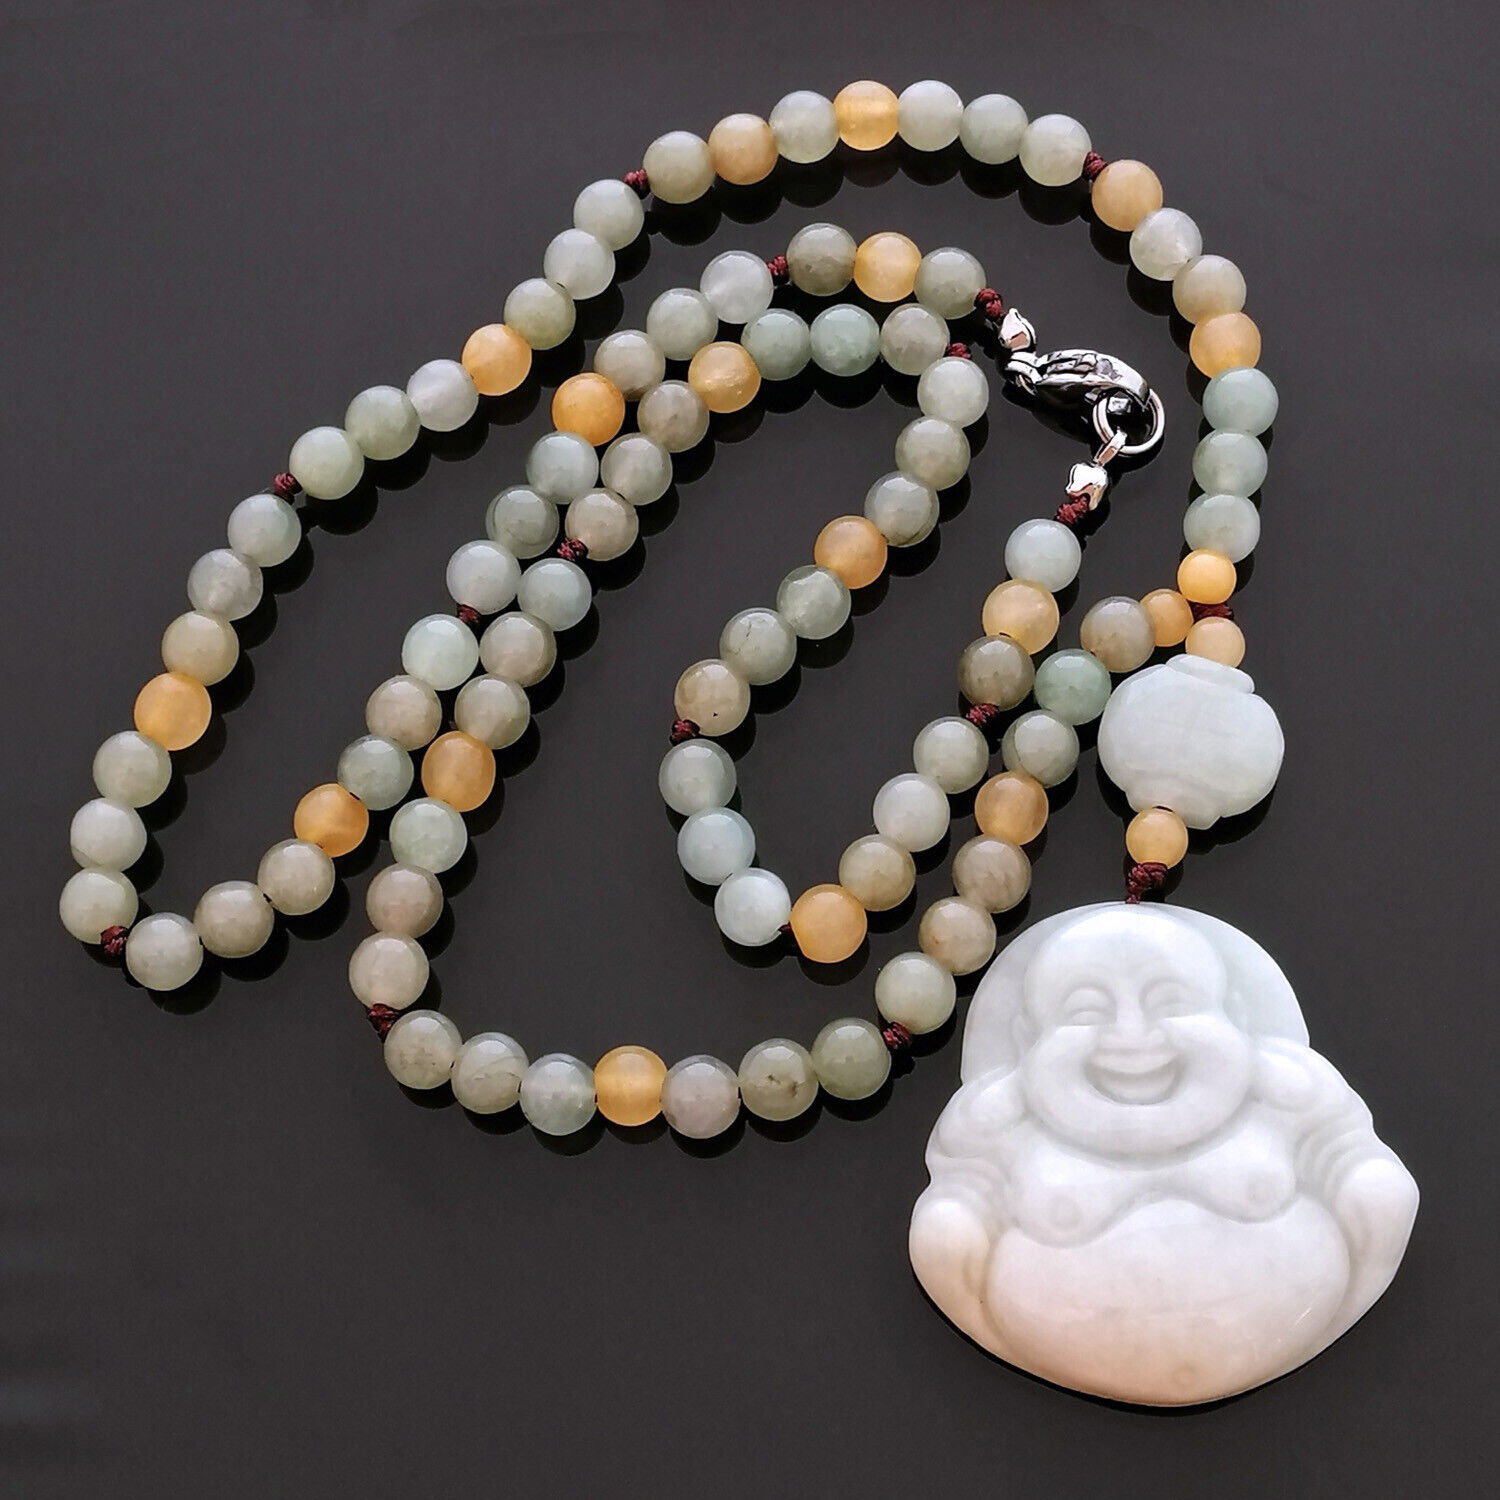 Authentic 100% Natural JADE Happy Buddha Amulet Pendant Necklace